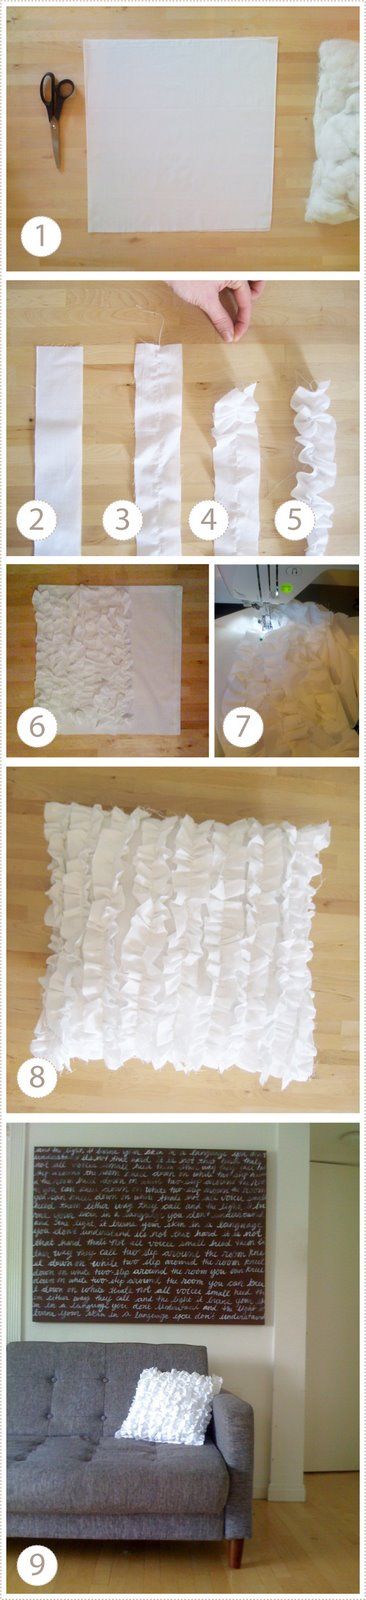 DIY ruffle pillows. I can So make this!